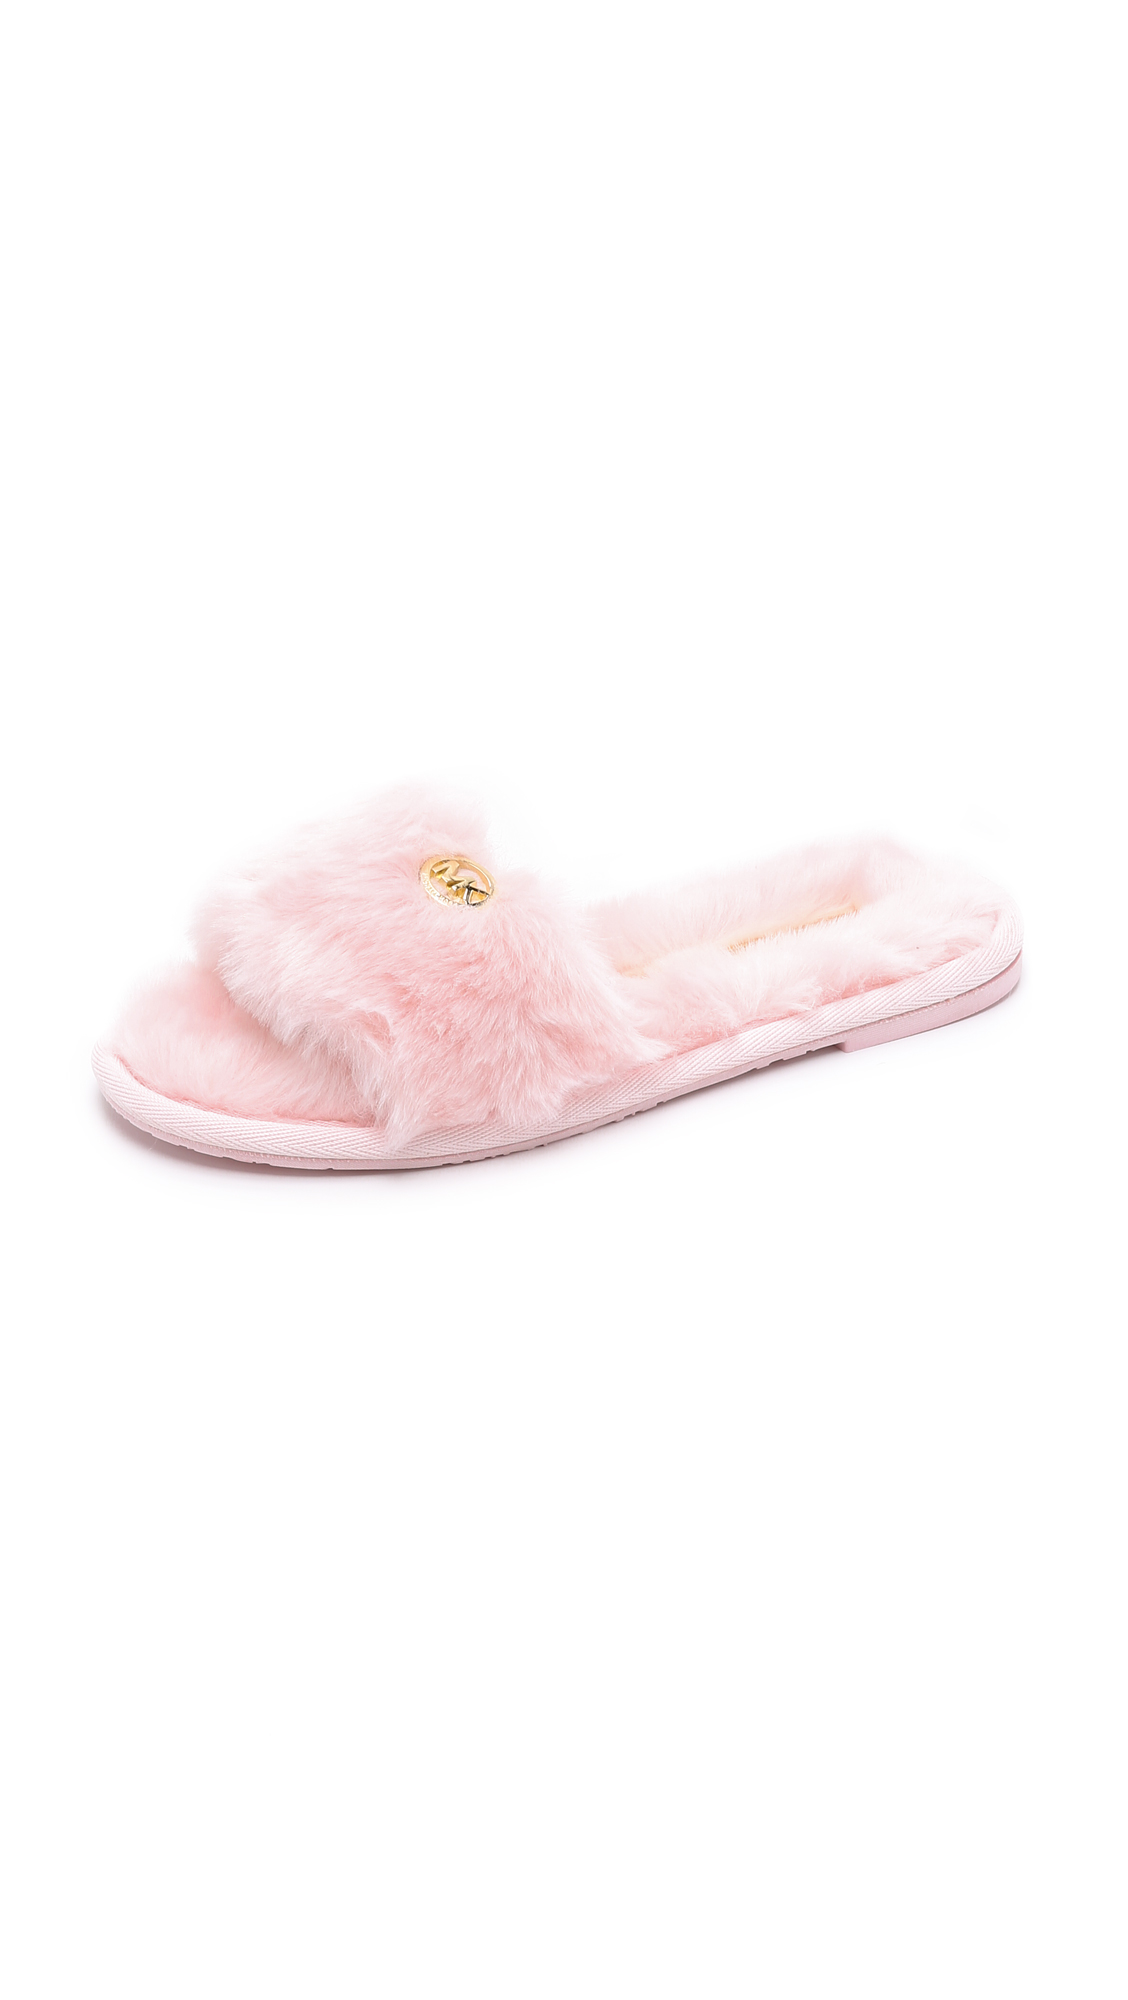 michael kors jet set faux fur slide slippers